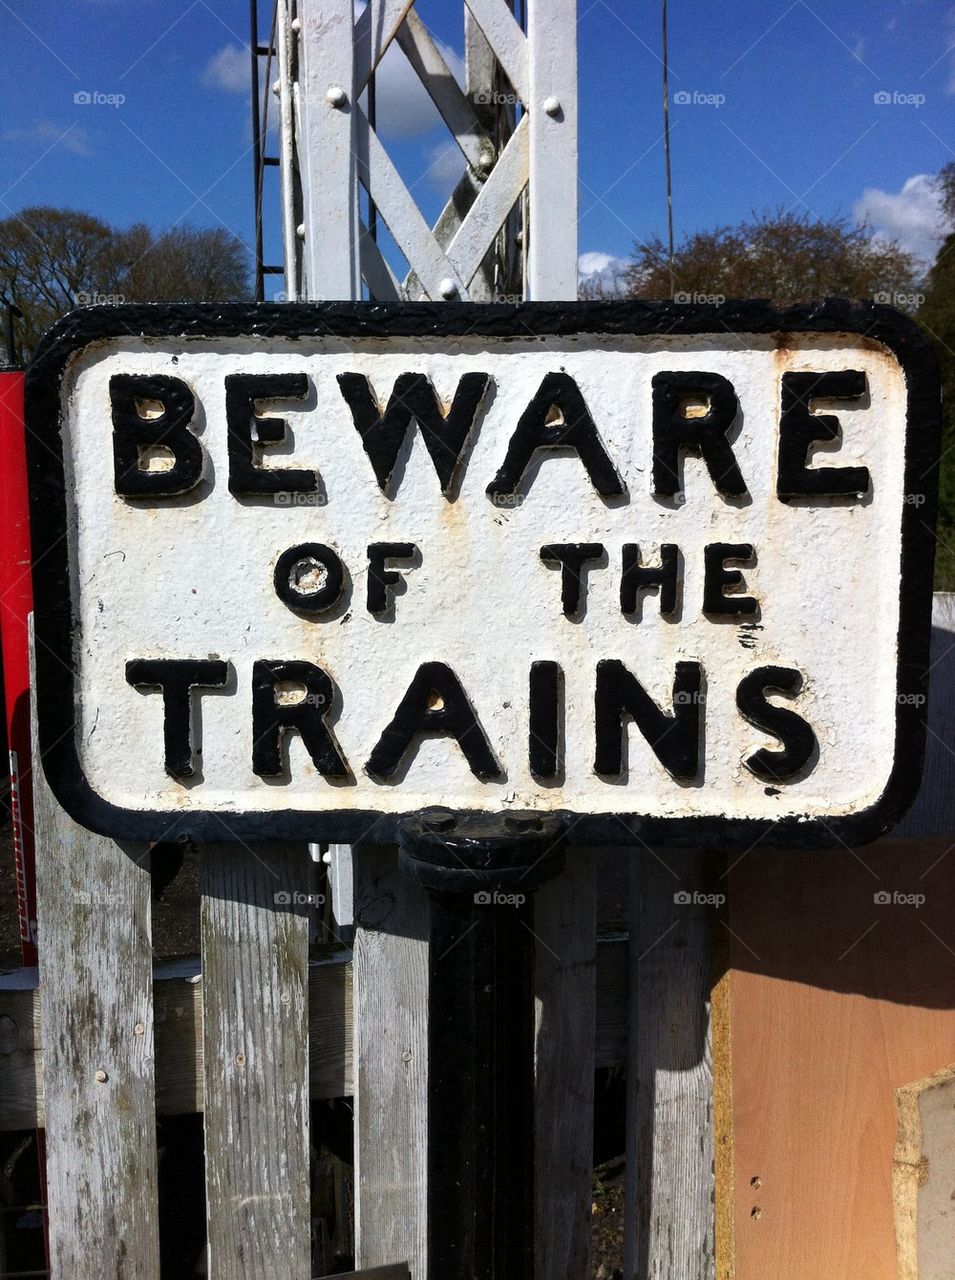 Bad Trains